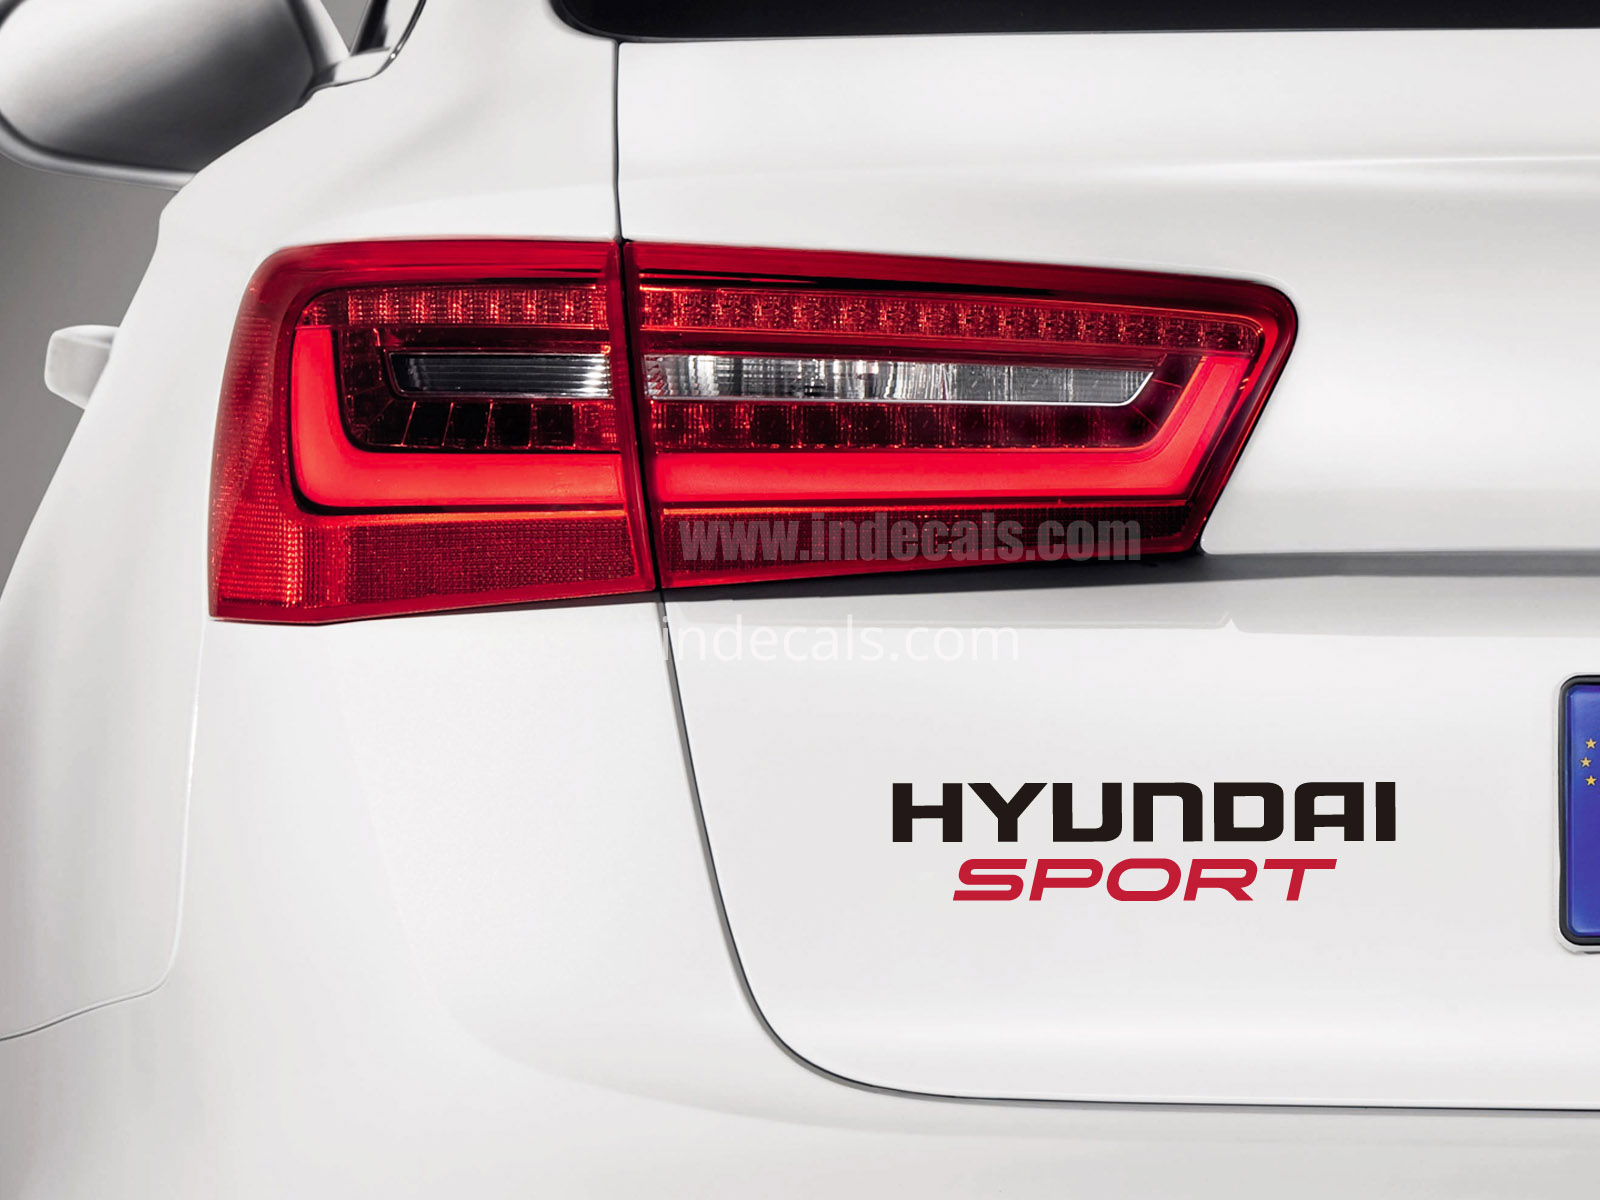 1 x Hyundai Sports Sticker for Trunk - Black & Red